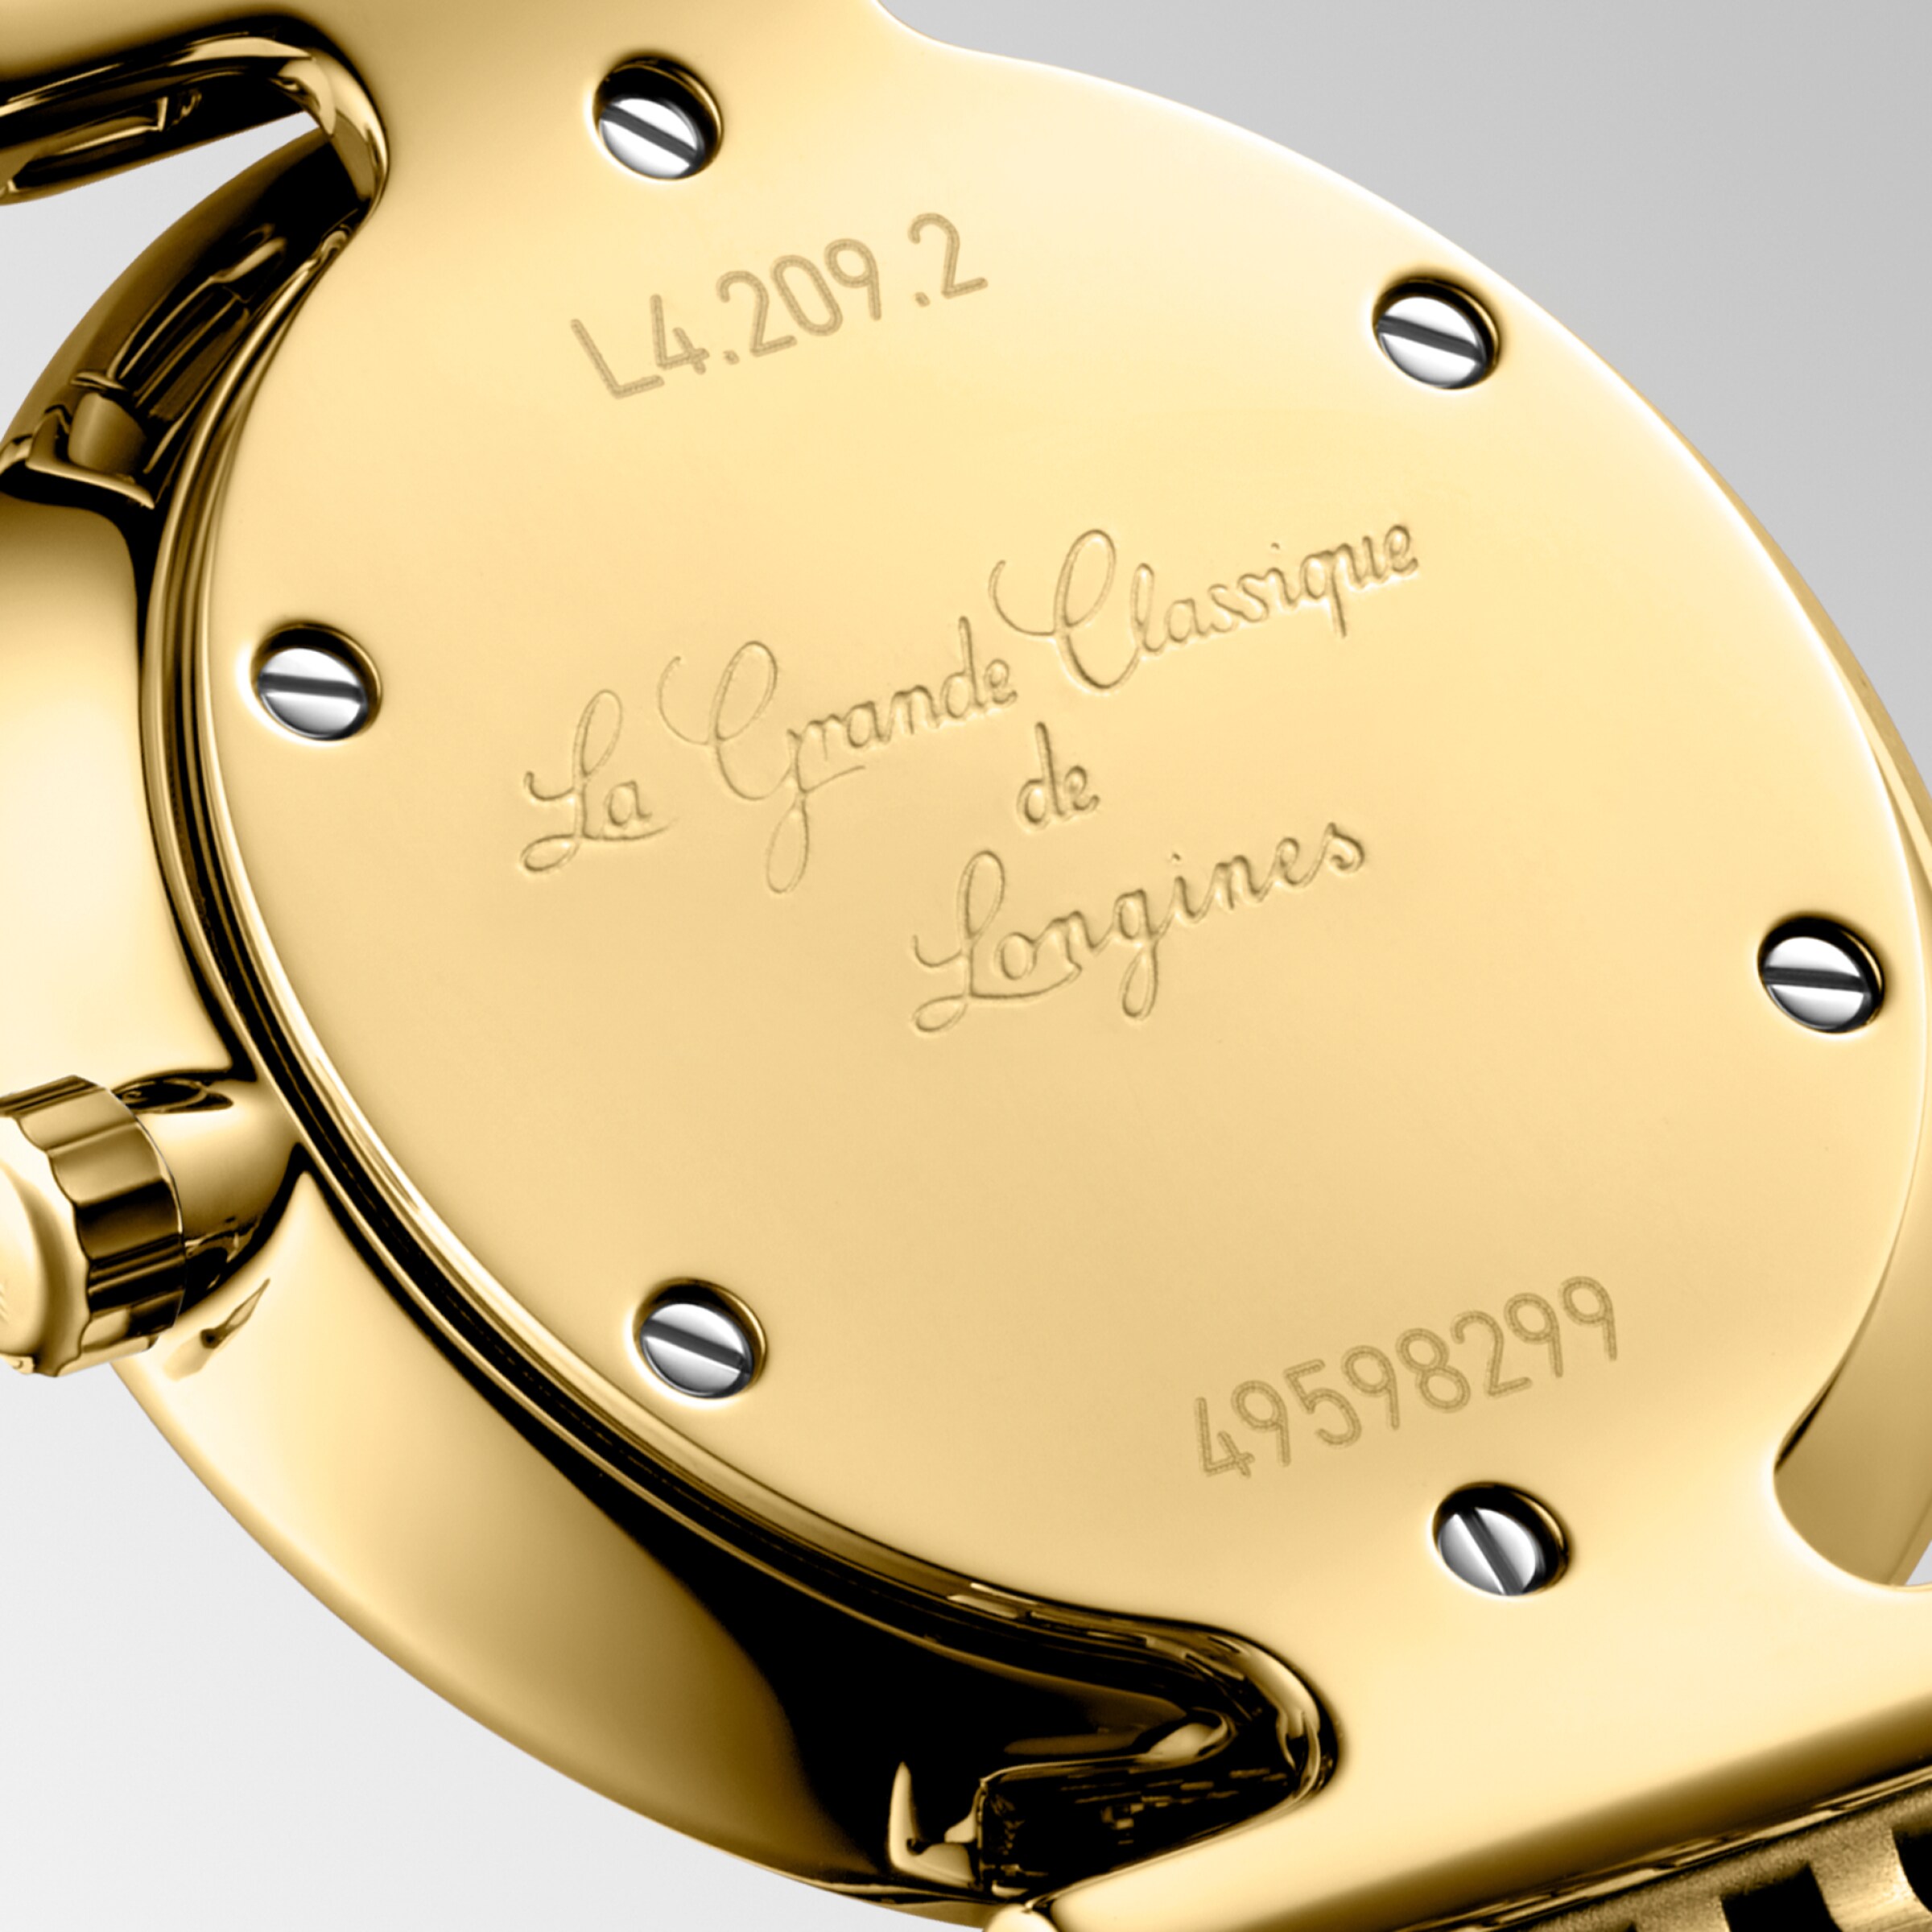 Longines LA GRANDE CLASSIQUE DE LONGINES Quartz Yellow PVD coating Watch - L4.209.2.87.8